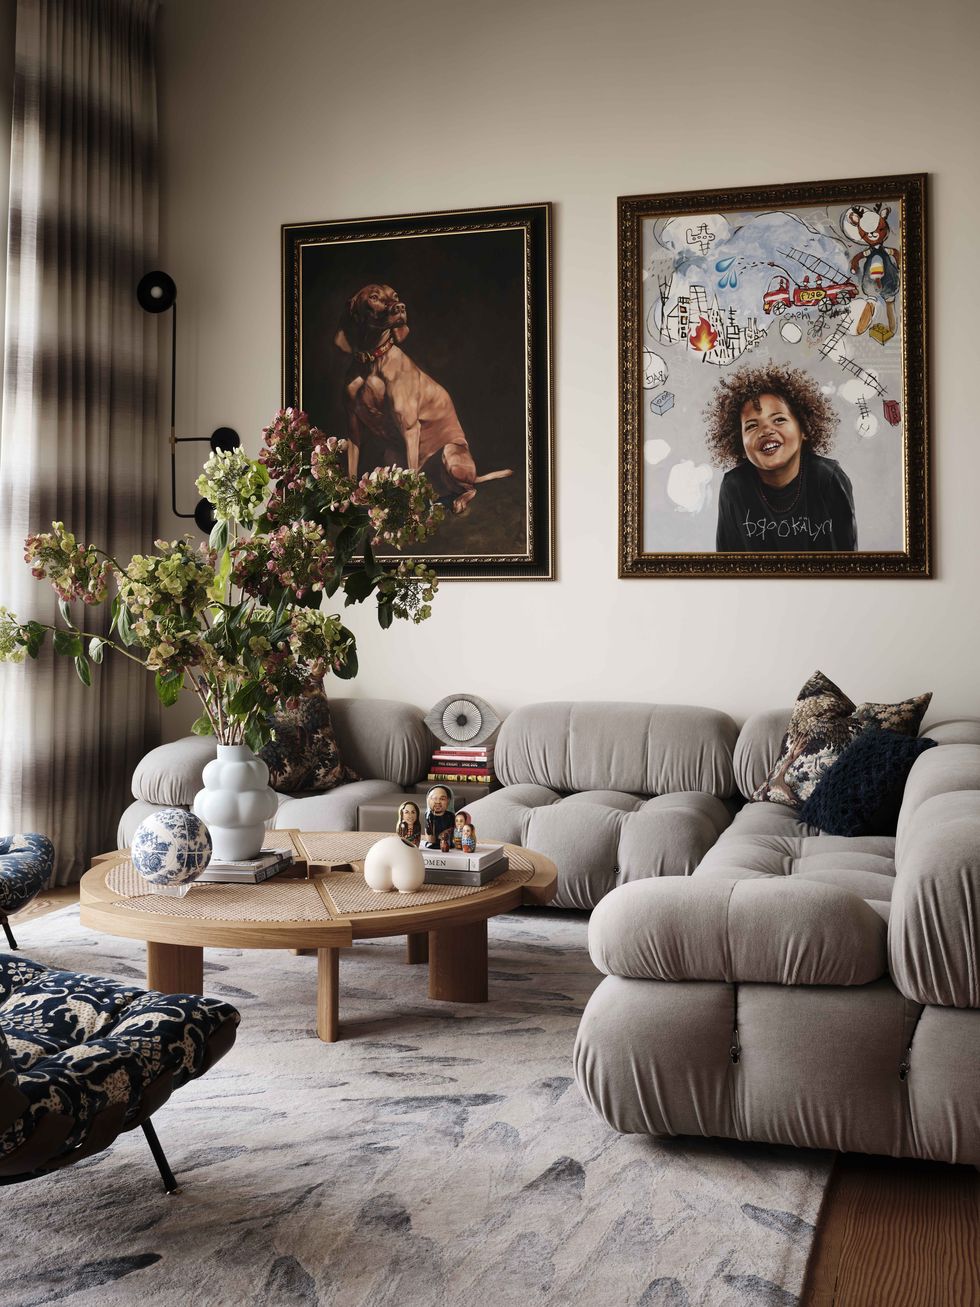 Blush Pink Sofa: Living Room Decor Inspiration - Pretty Little Details